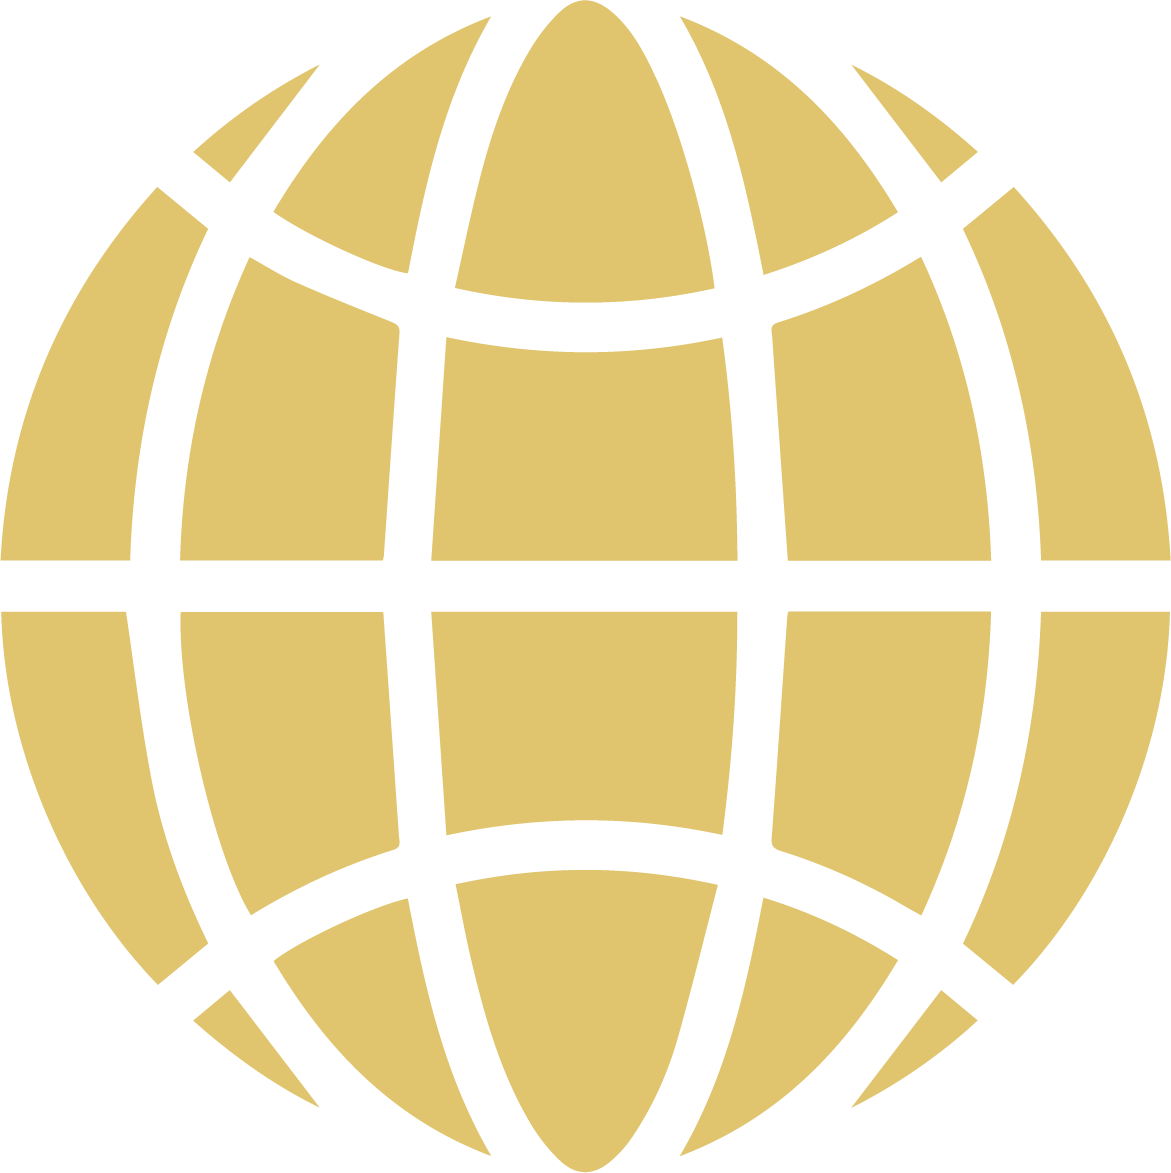 global/international icon